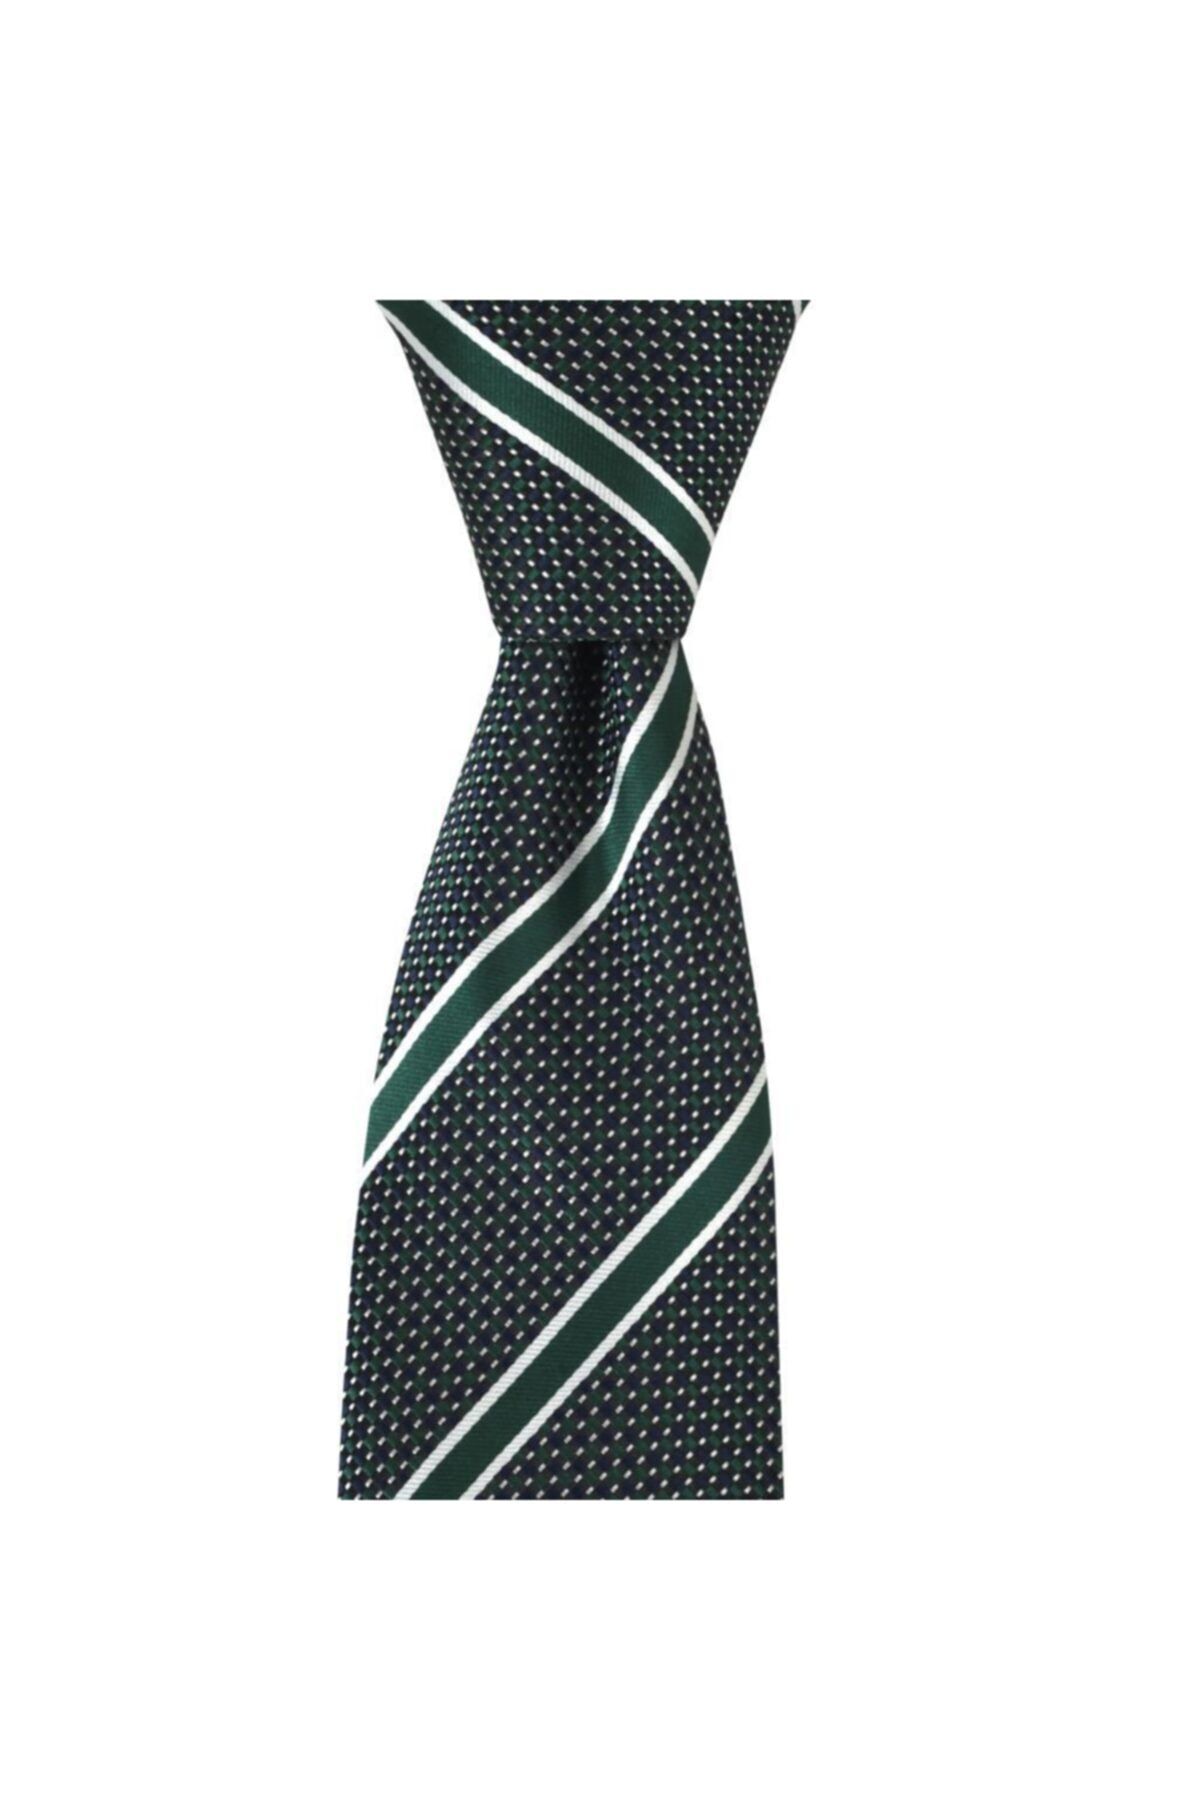 Brianze Erkek Yeşil Çizgili Mendilli Kravat